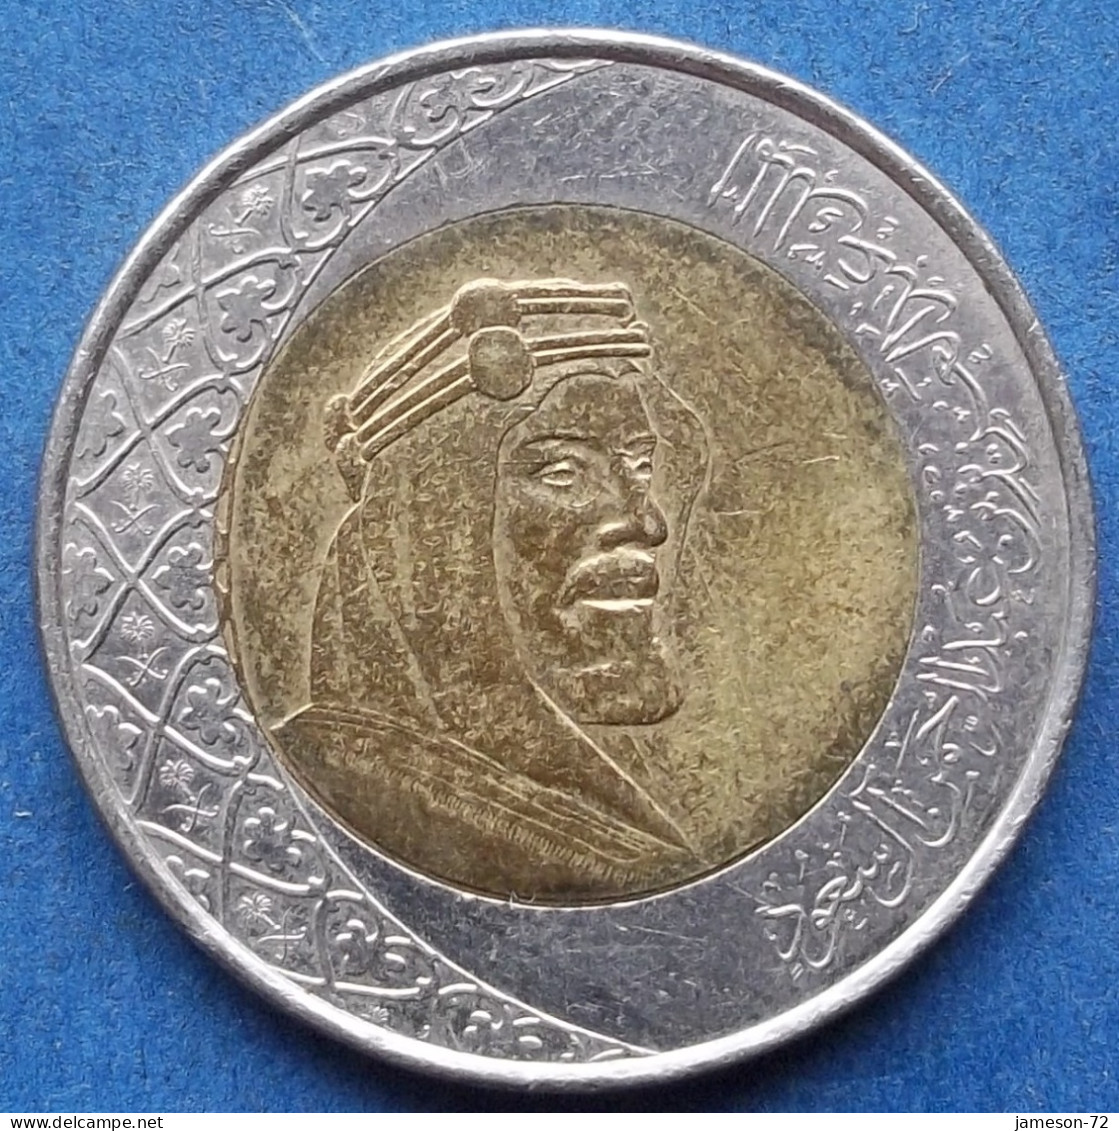 SAUDI ARABIA - 2 Riyals AH1438 / 2016AD KM# 79 Fahad Bin Abd Al-Aziz (1982) - Edelweiss Coins - Arabie Saoudite